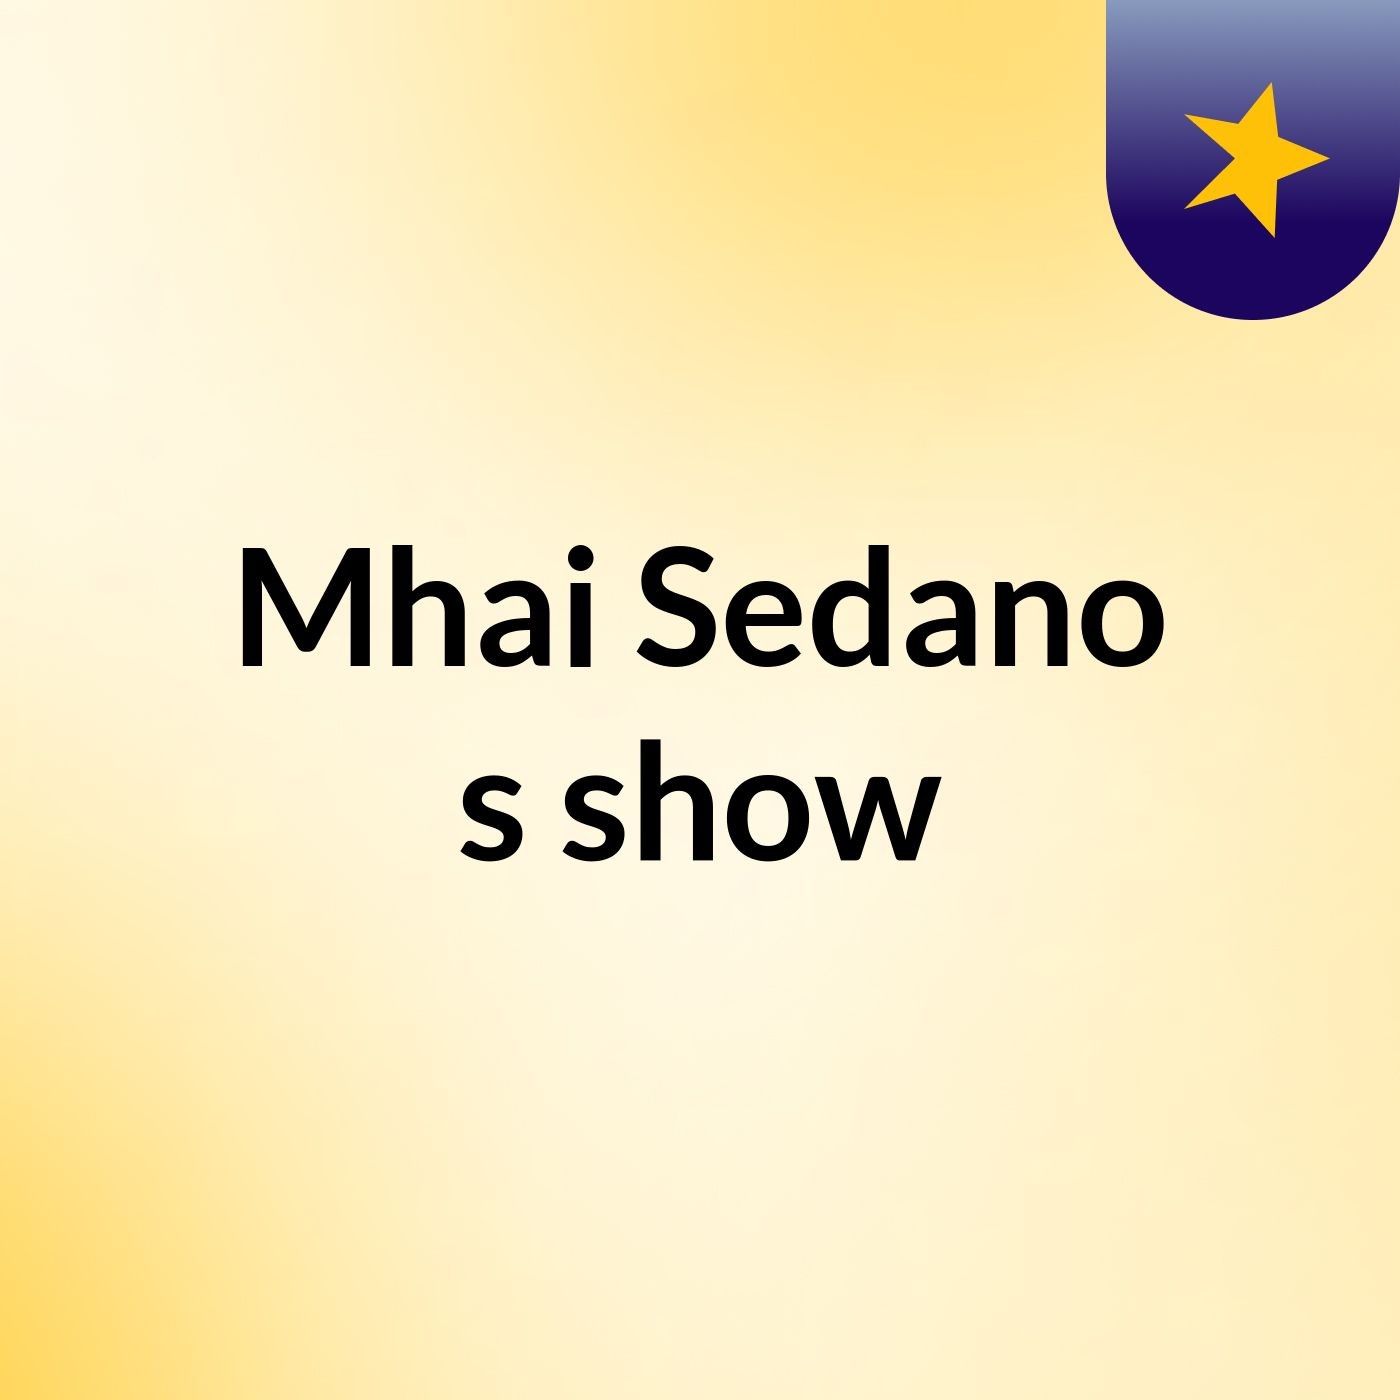 Mhai Sedano's show